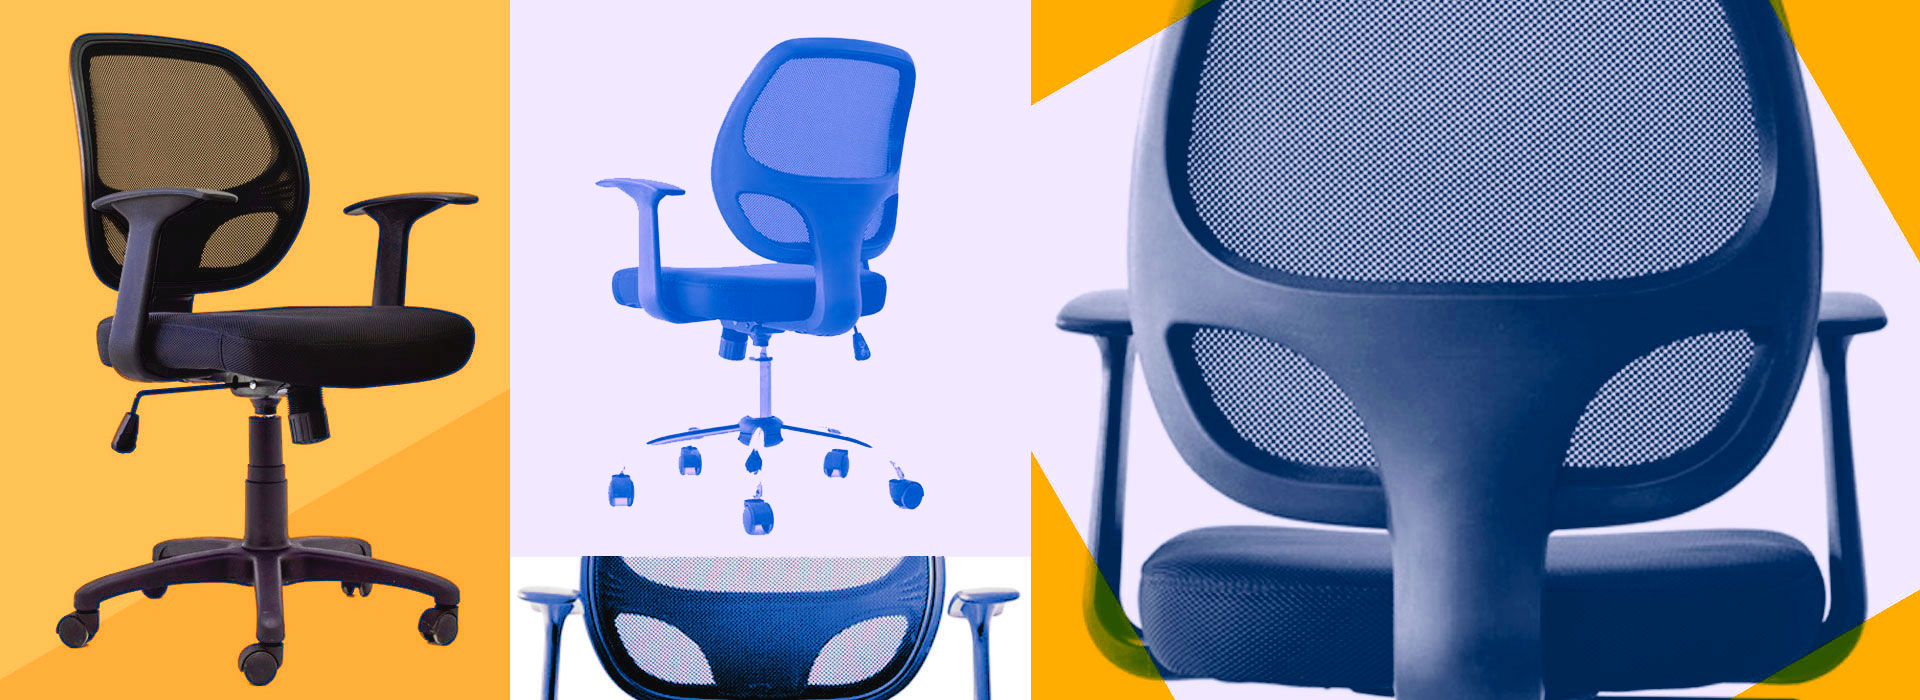 sillas-para-oficina-bismet-operativas-nexus